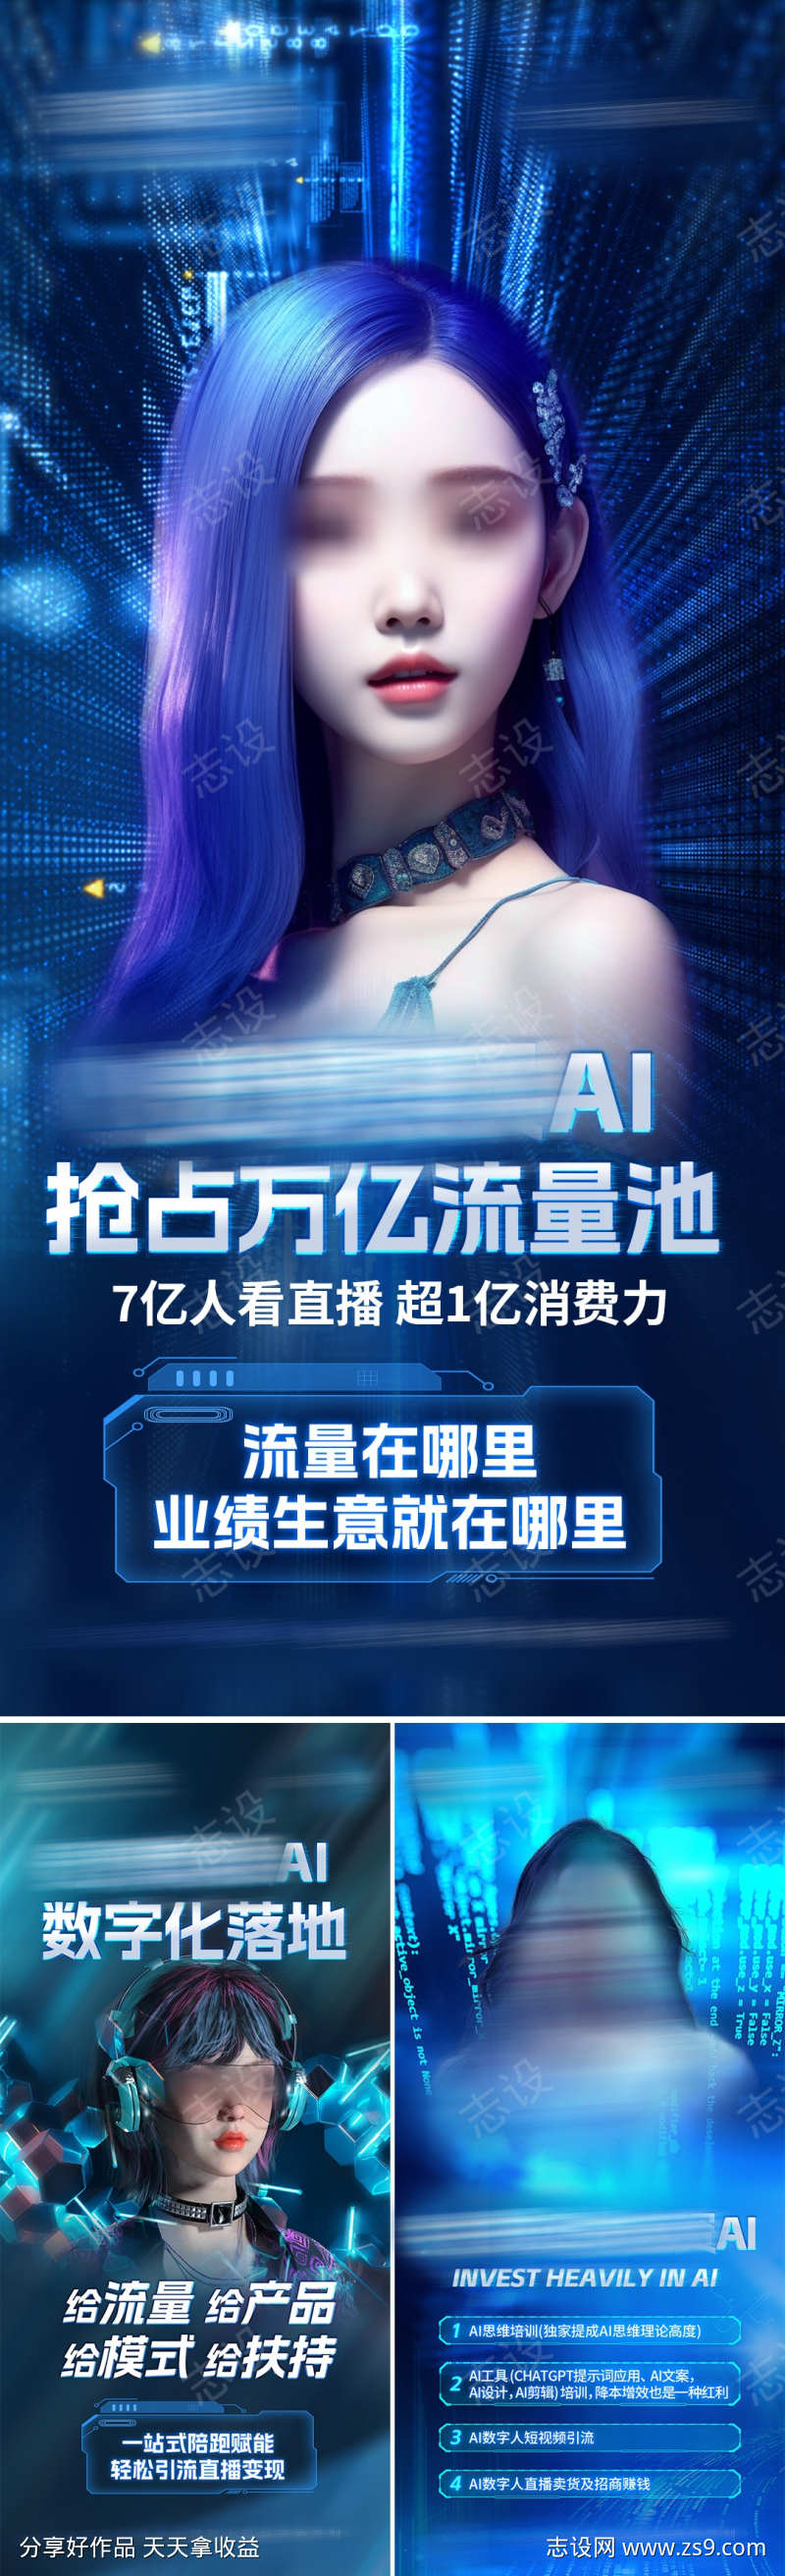 招商AI海报